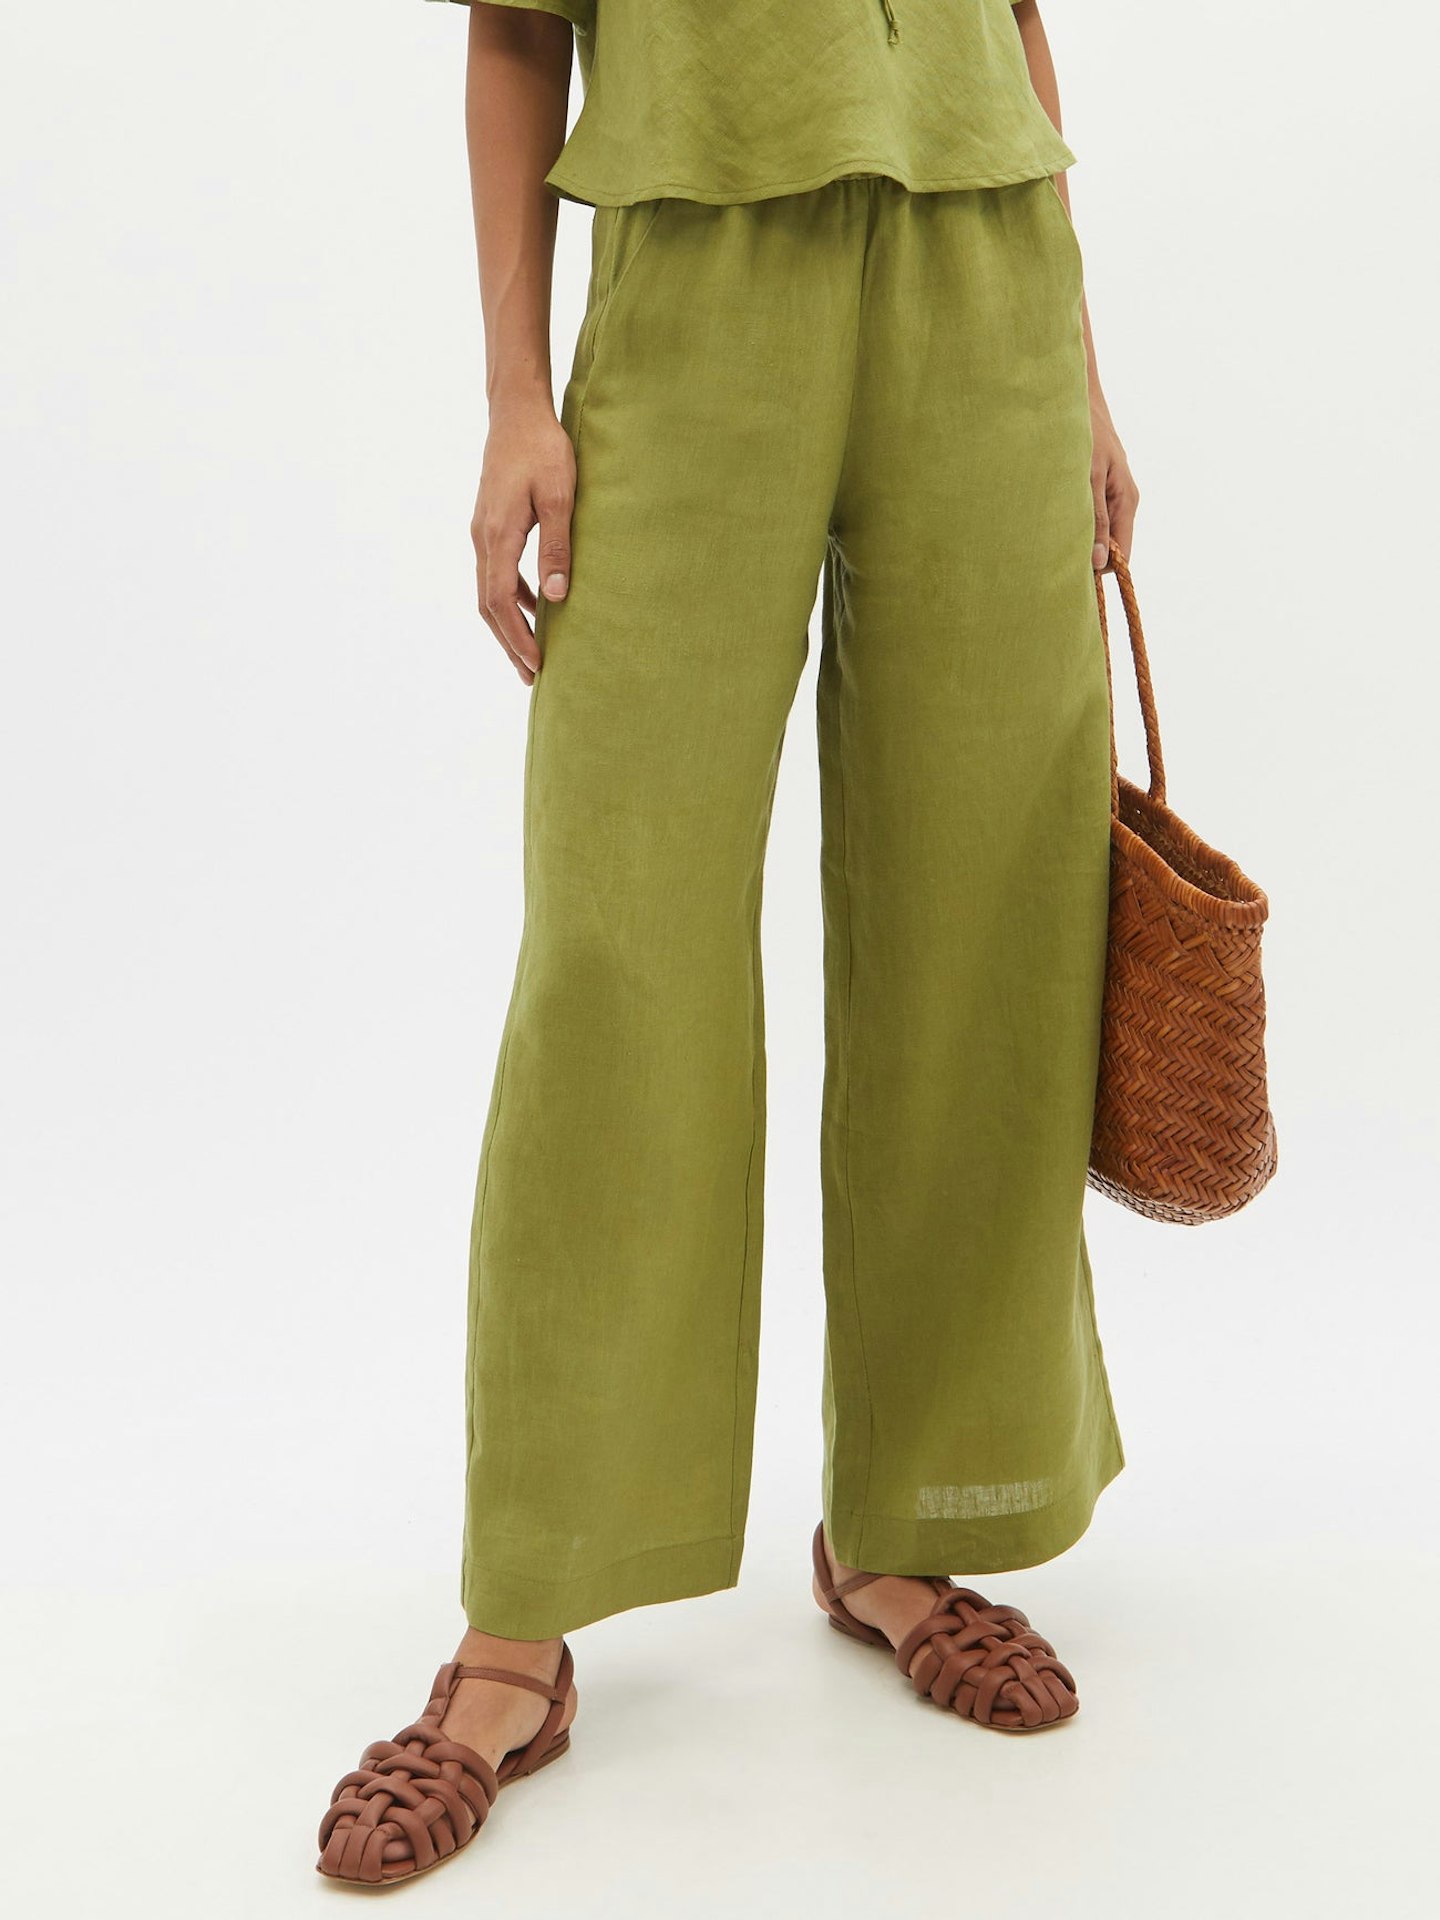 Casa Raki, Natalia organic-linen wide-leg trousers, £220